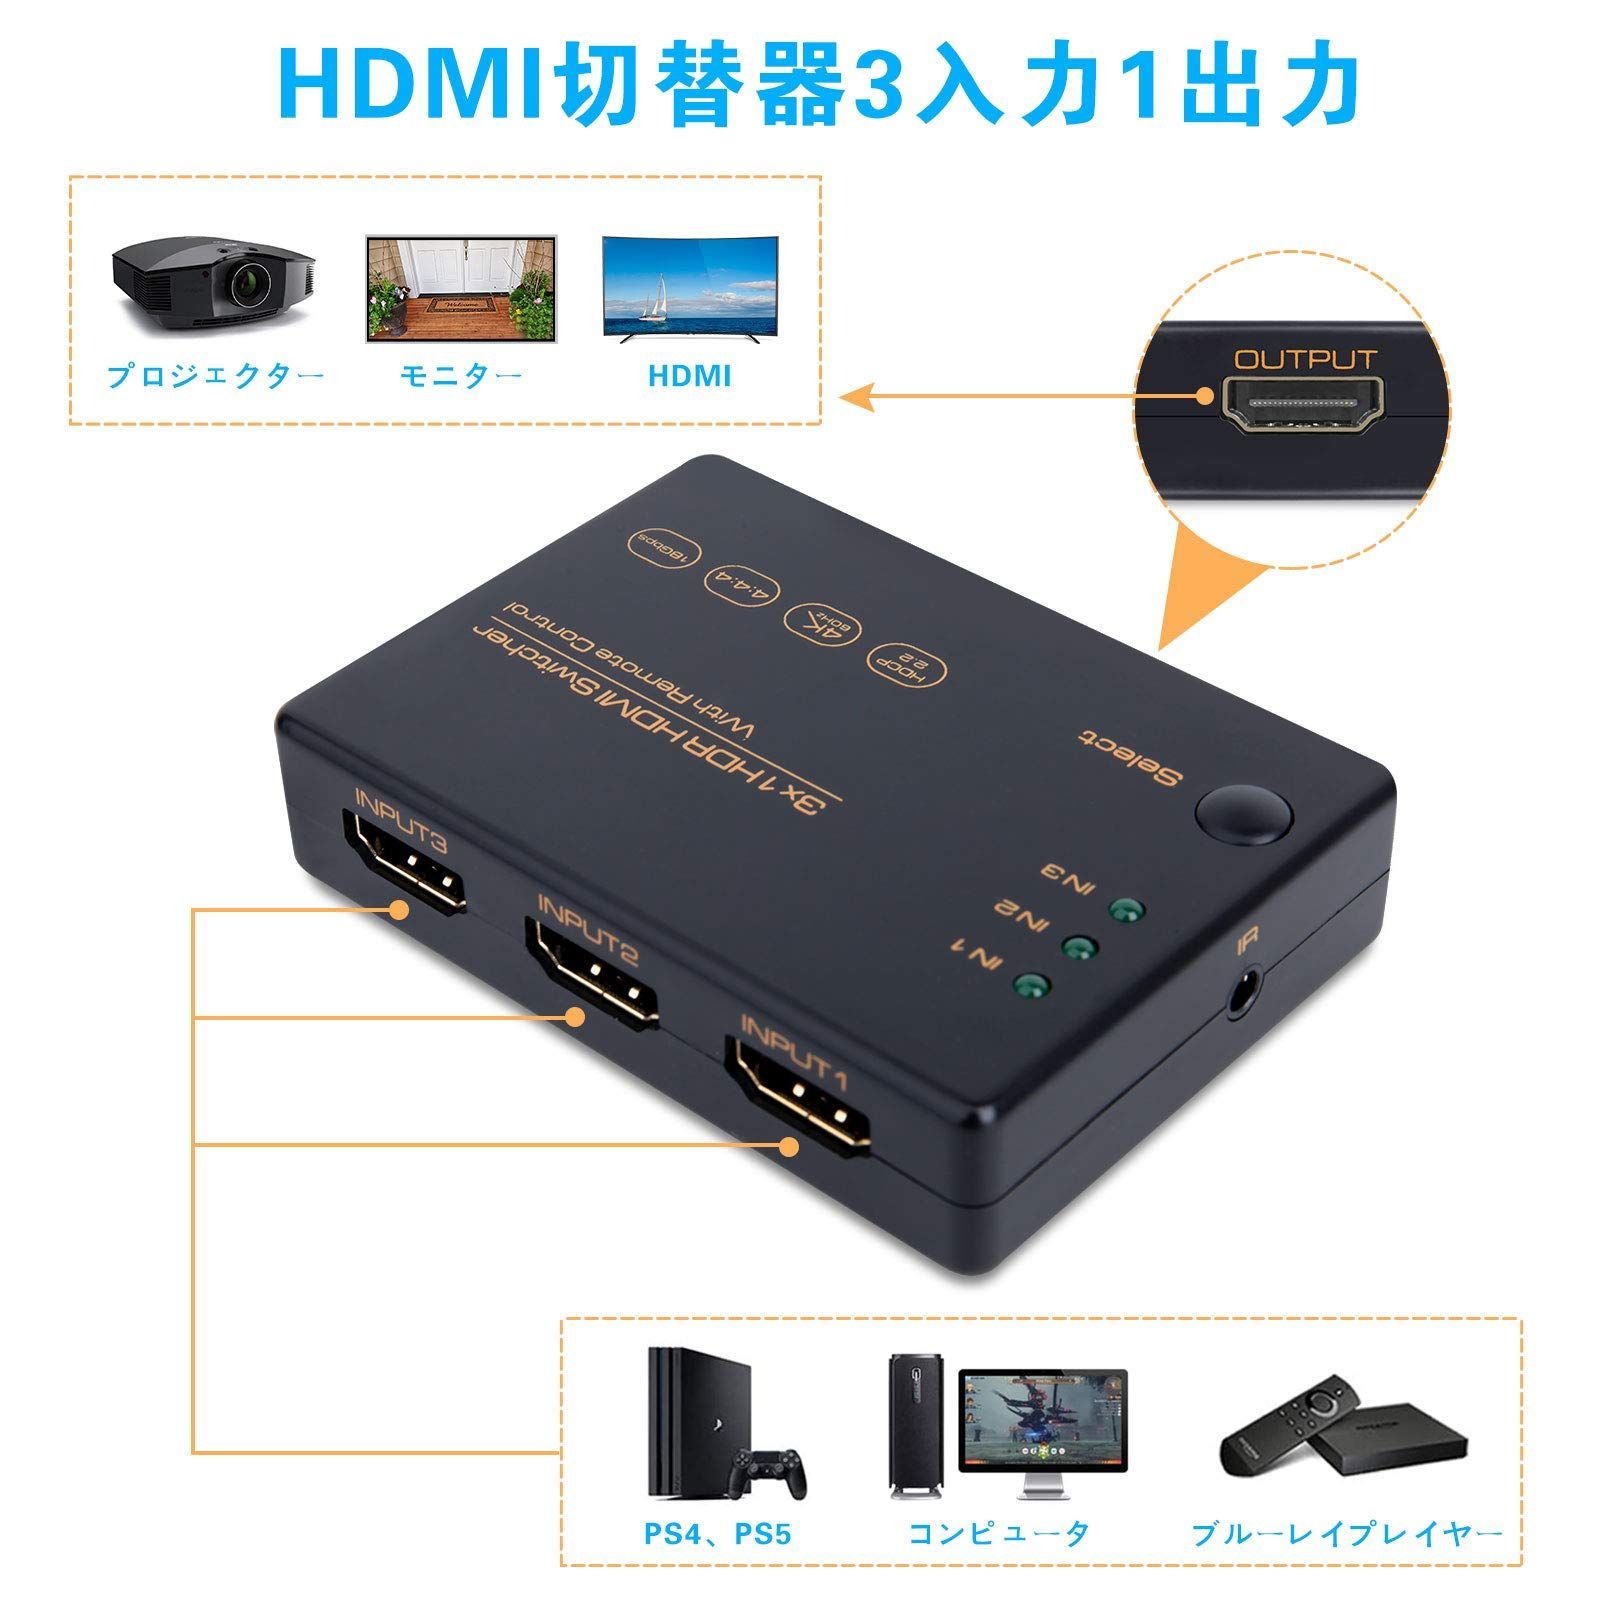 HDMI切替器 HDMI分配器 3入力1出力 自動 手動 リモコン 4K 60Hz HDMI2.0 フルHD 1080P PS4 Xbox Apple  TV tecc-hdm3kiri 切り替え